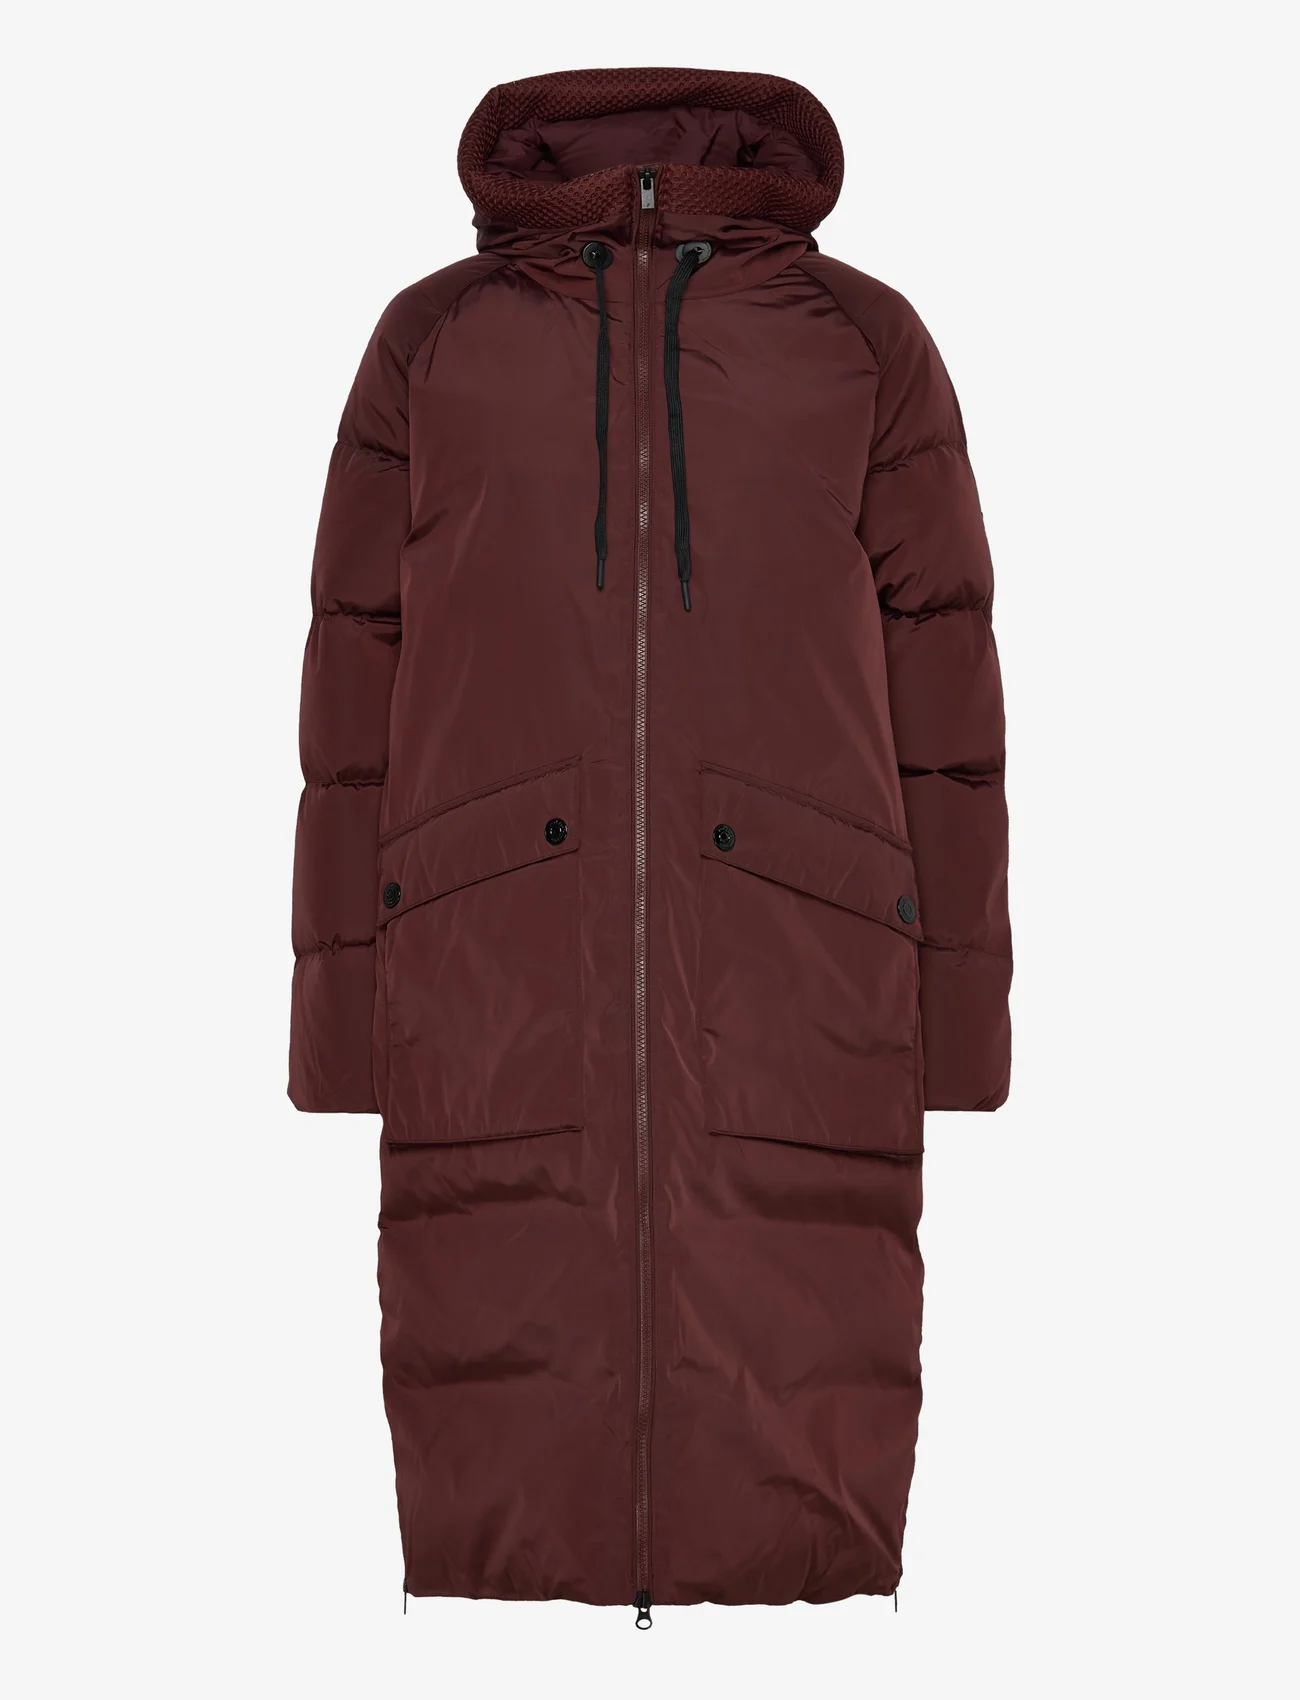 Peak Performance - W Stella Coat - winter coats - sapote - 0